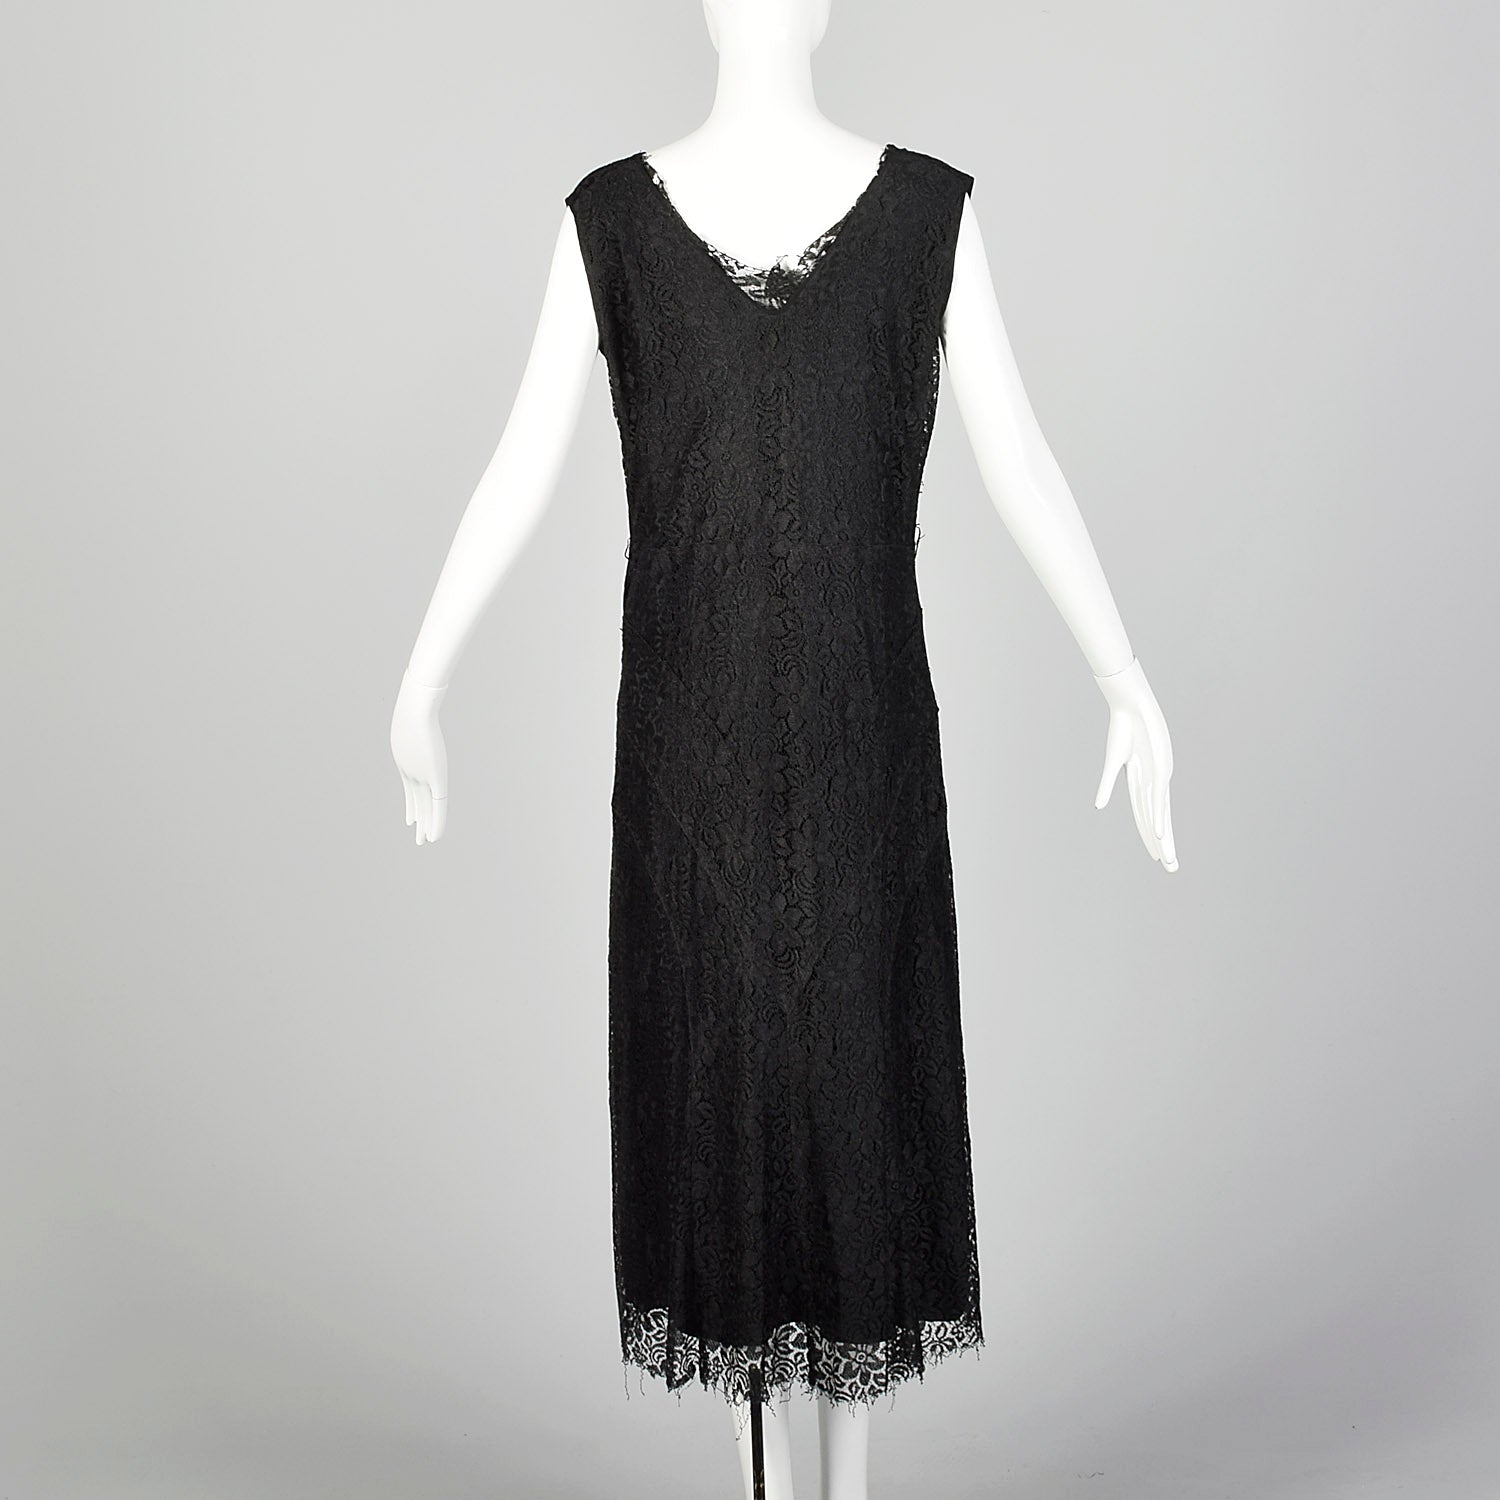 Large 1930s Black Lace Dress